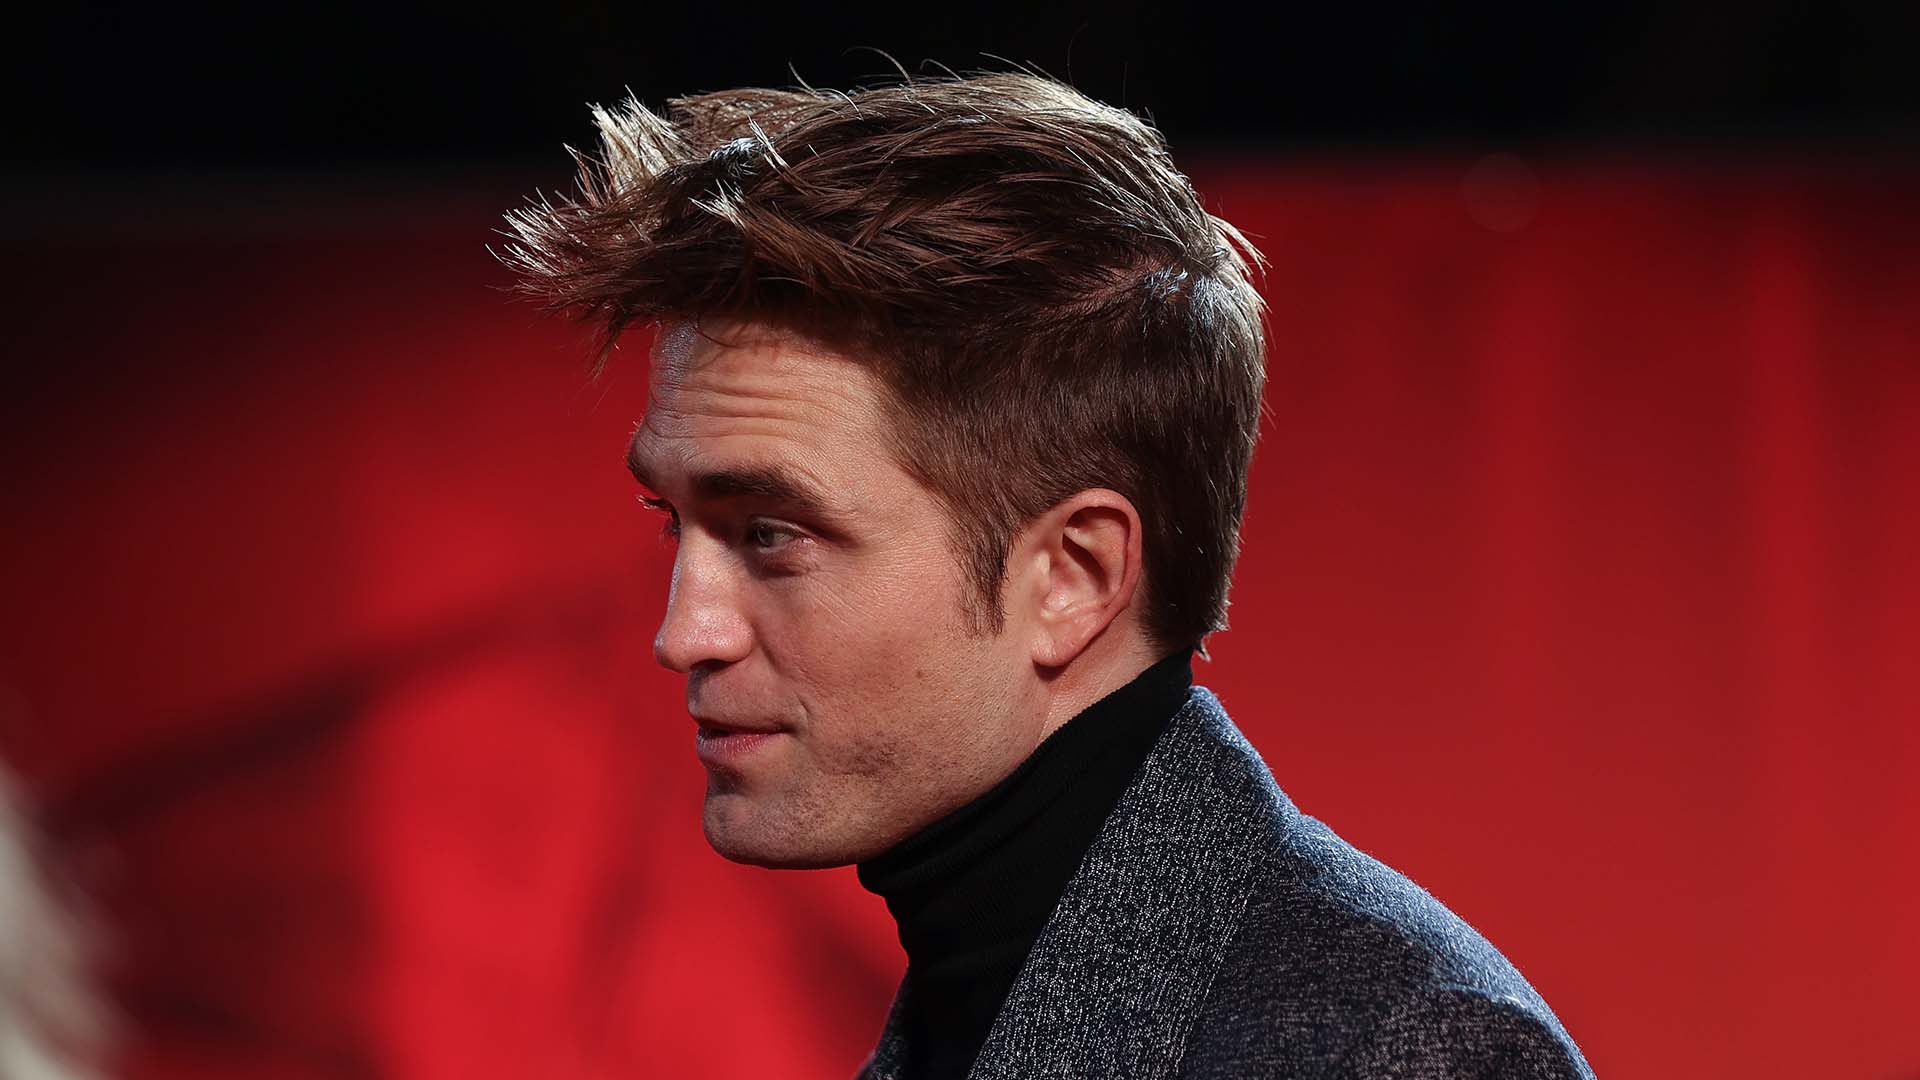 Robert Pattinson: Short Cut With Texture | Man For Himself